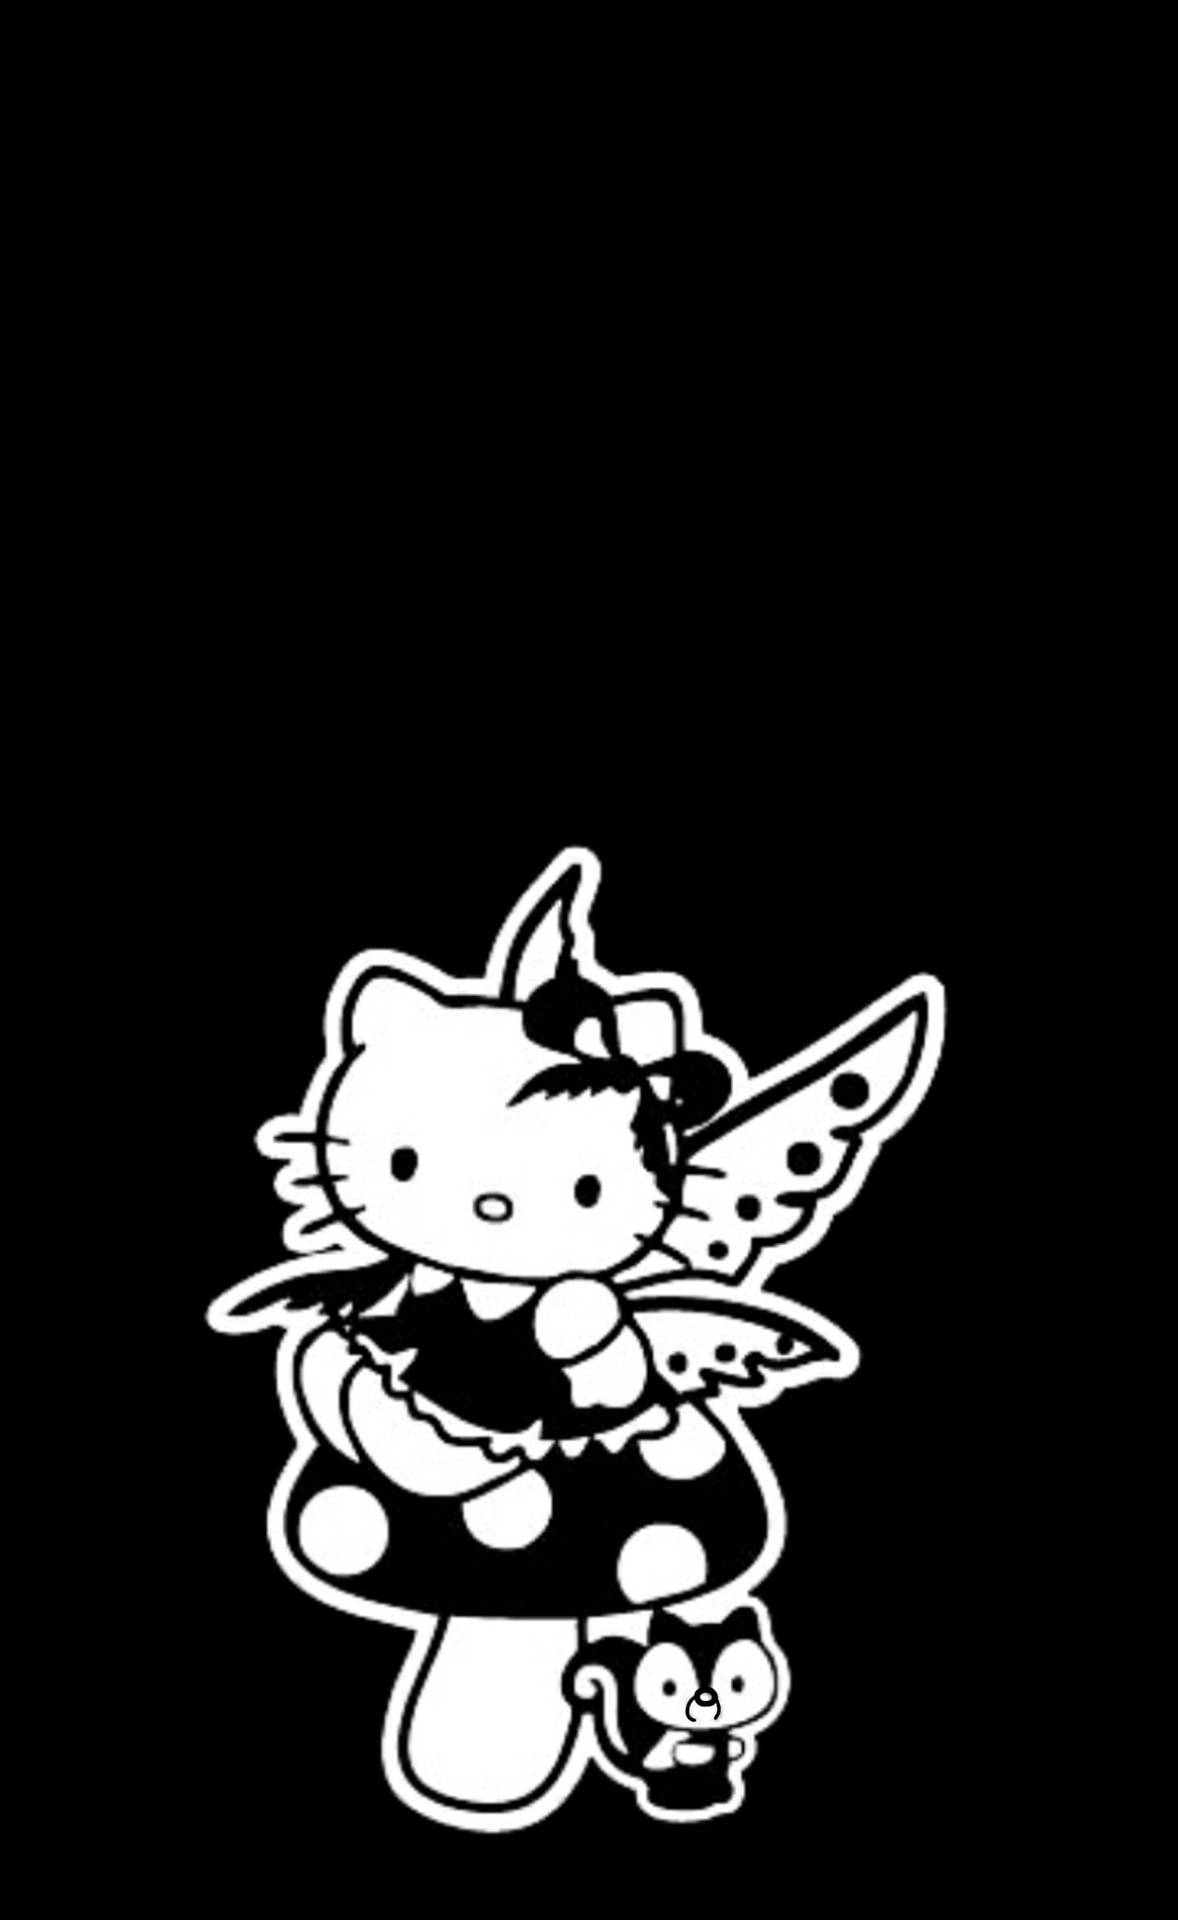 Black Hello Kitty In Fairy Costume Wallpaper